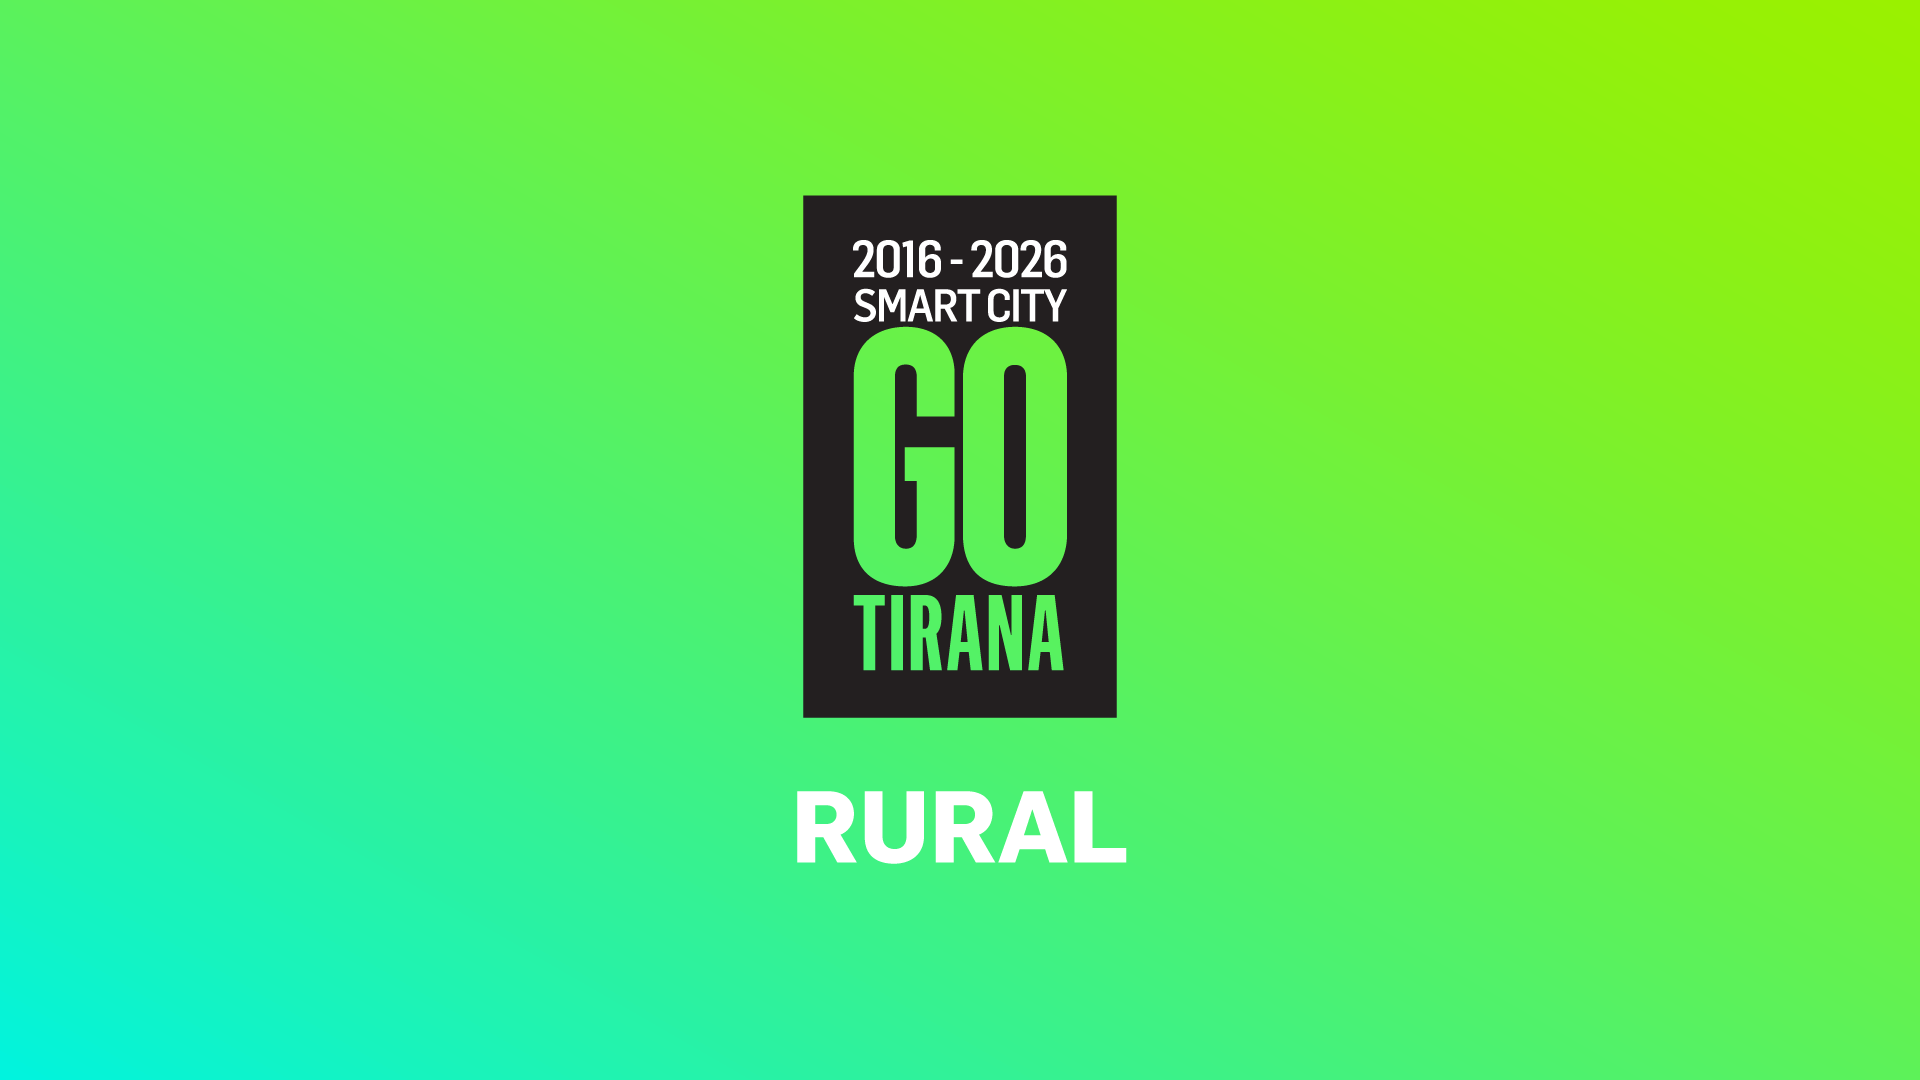 Tirana Smart City - Rural